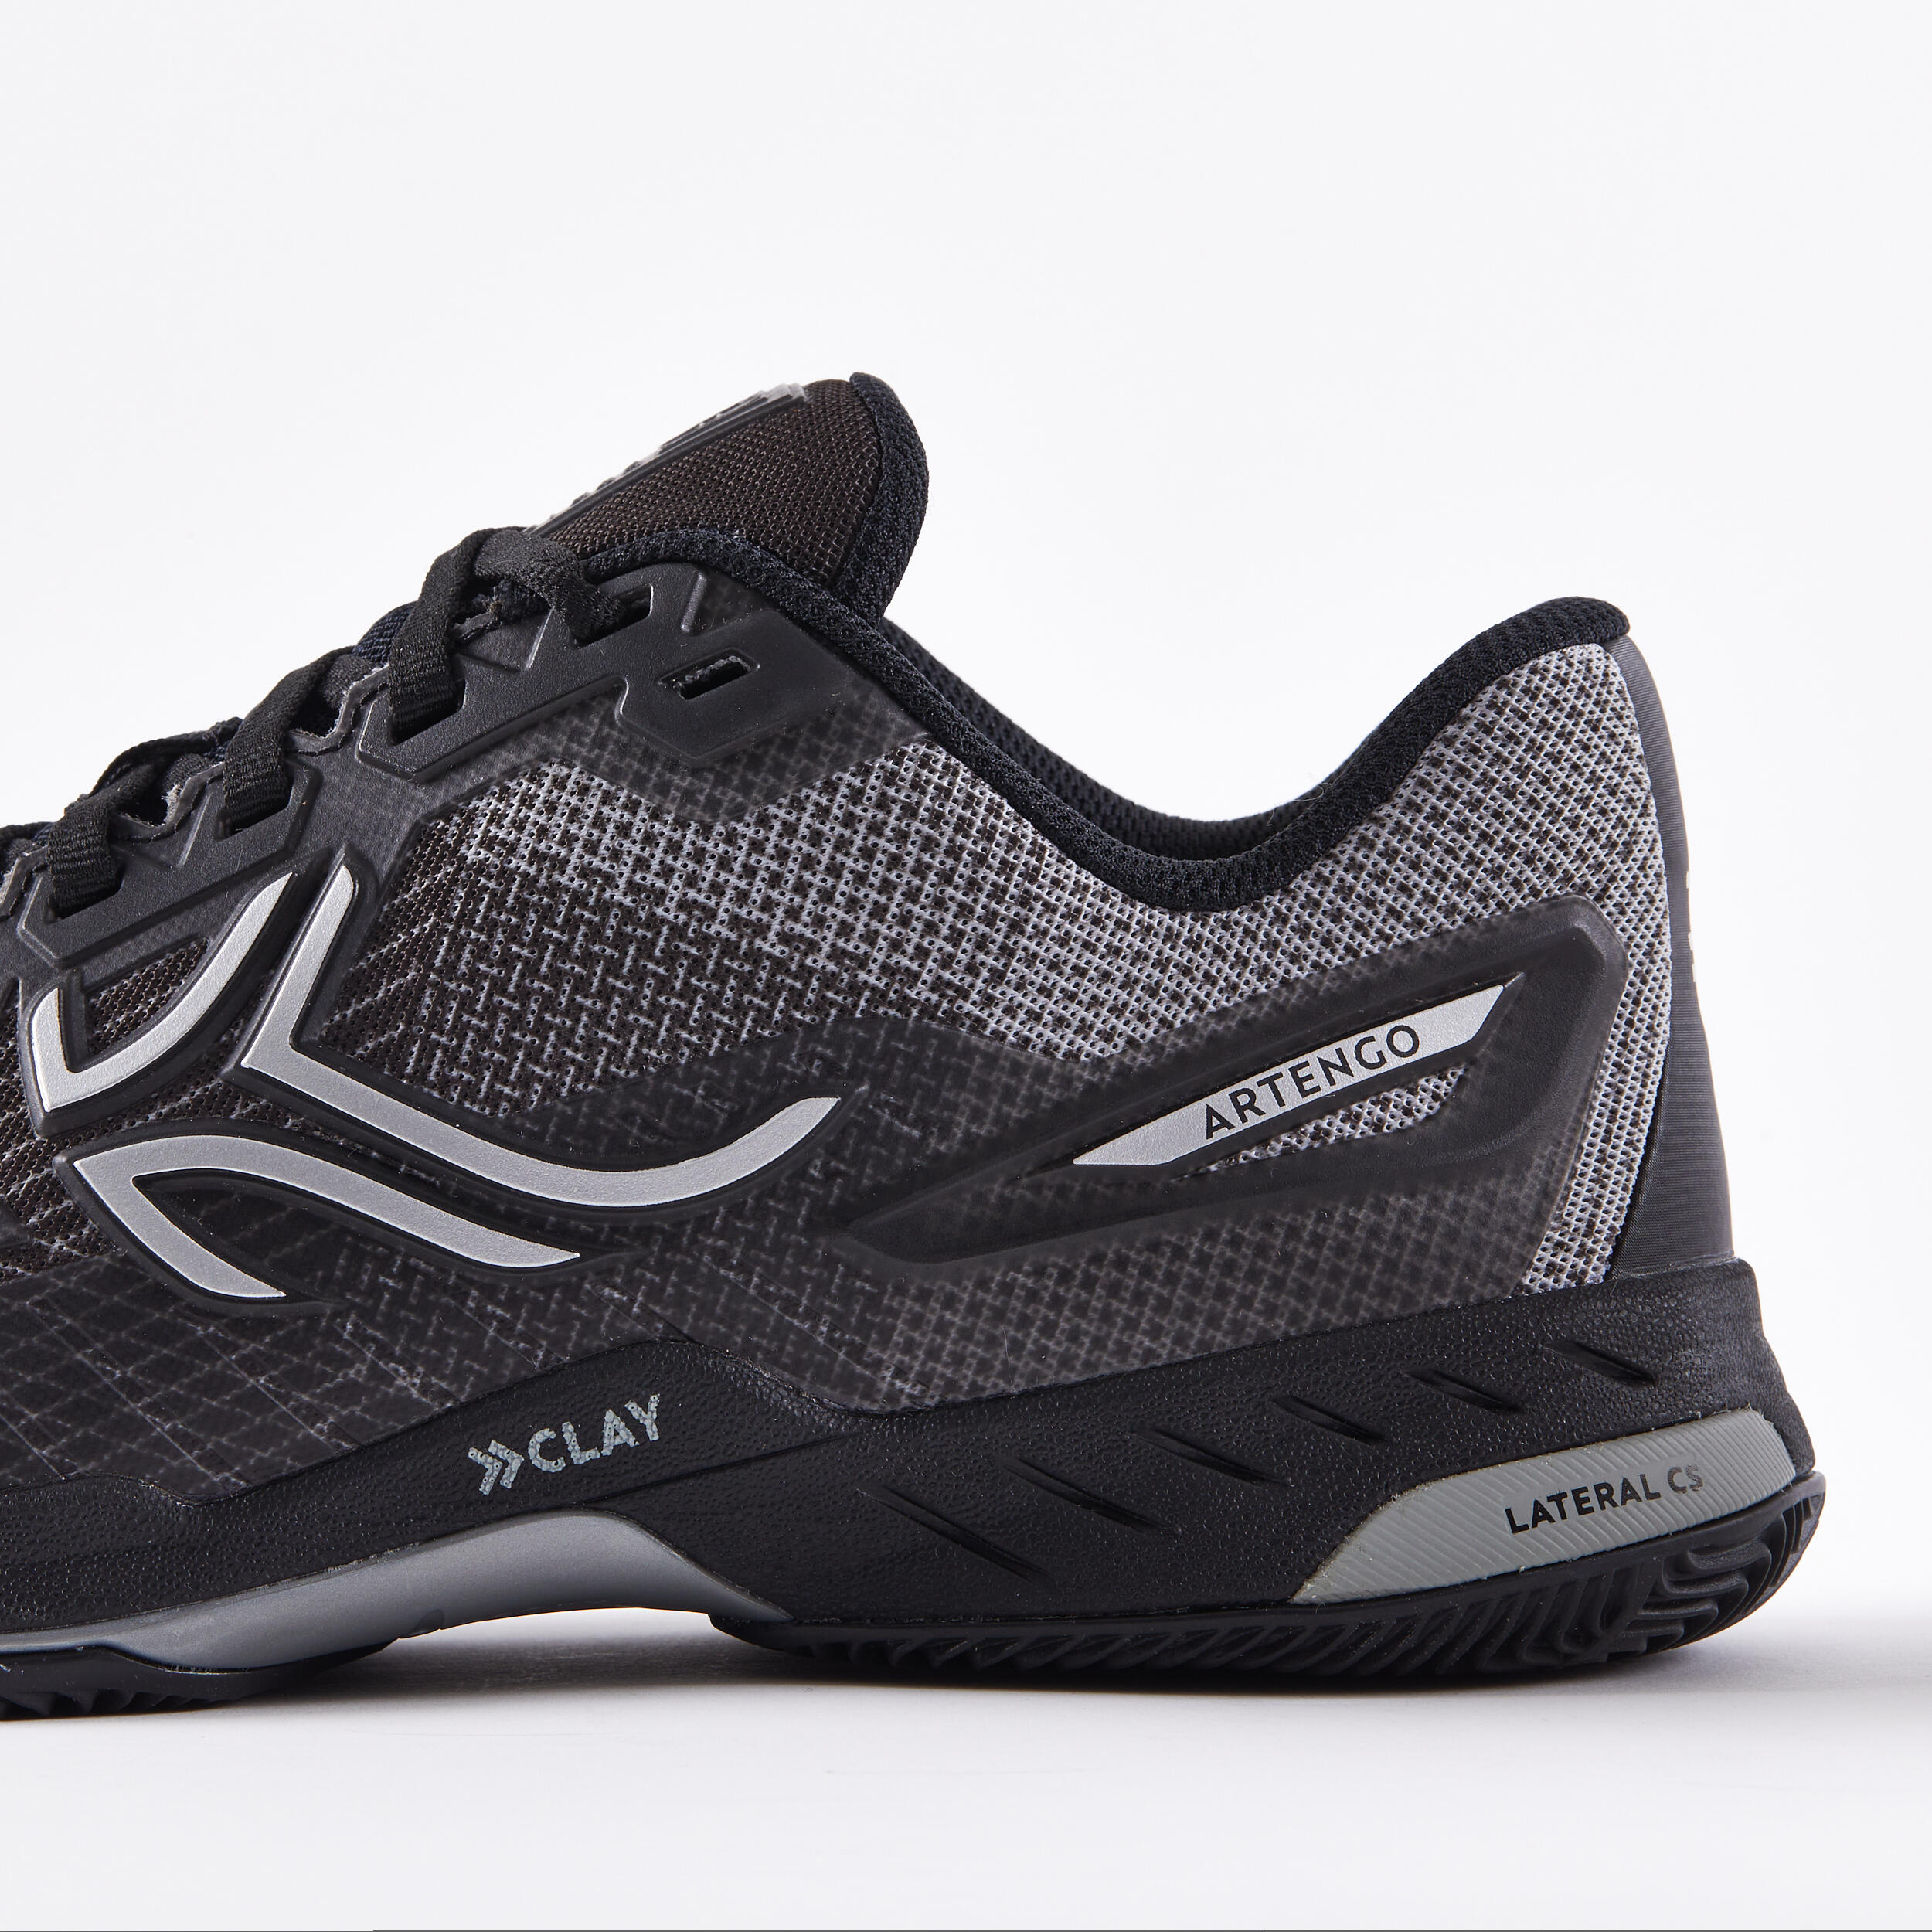 Men's Clay Court Tennis Shoes TS990 - Black 6/8